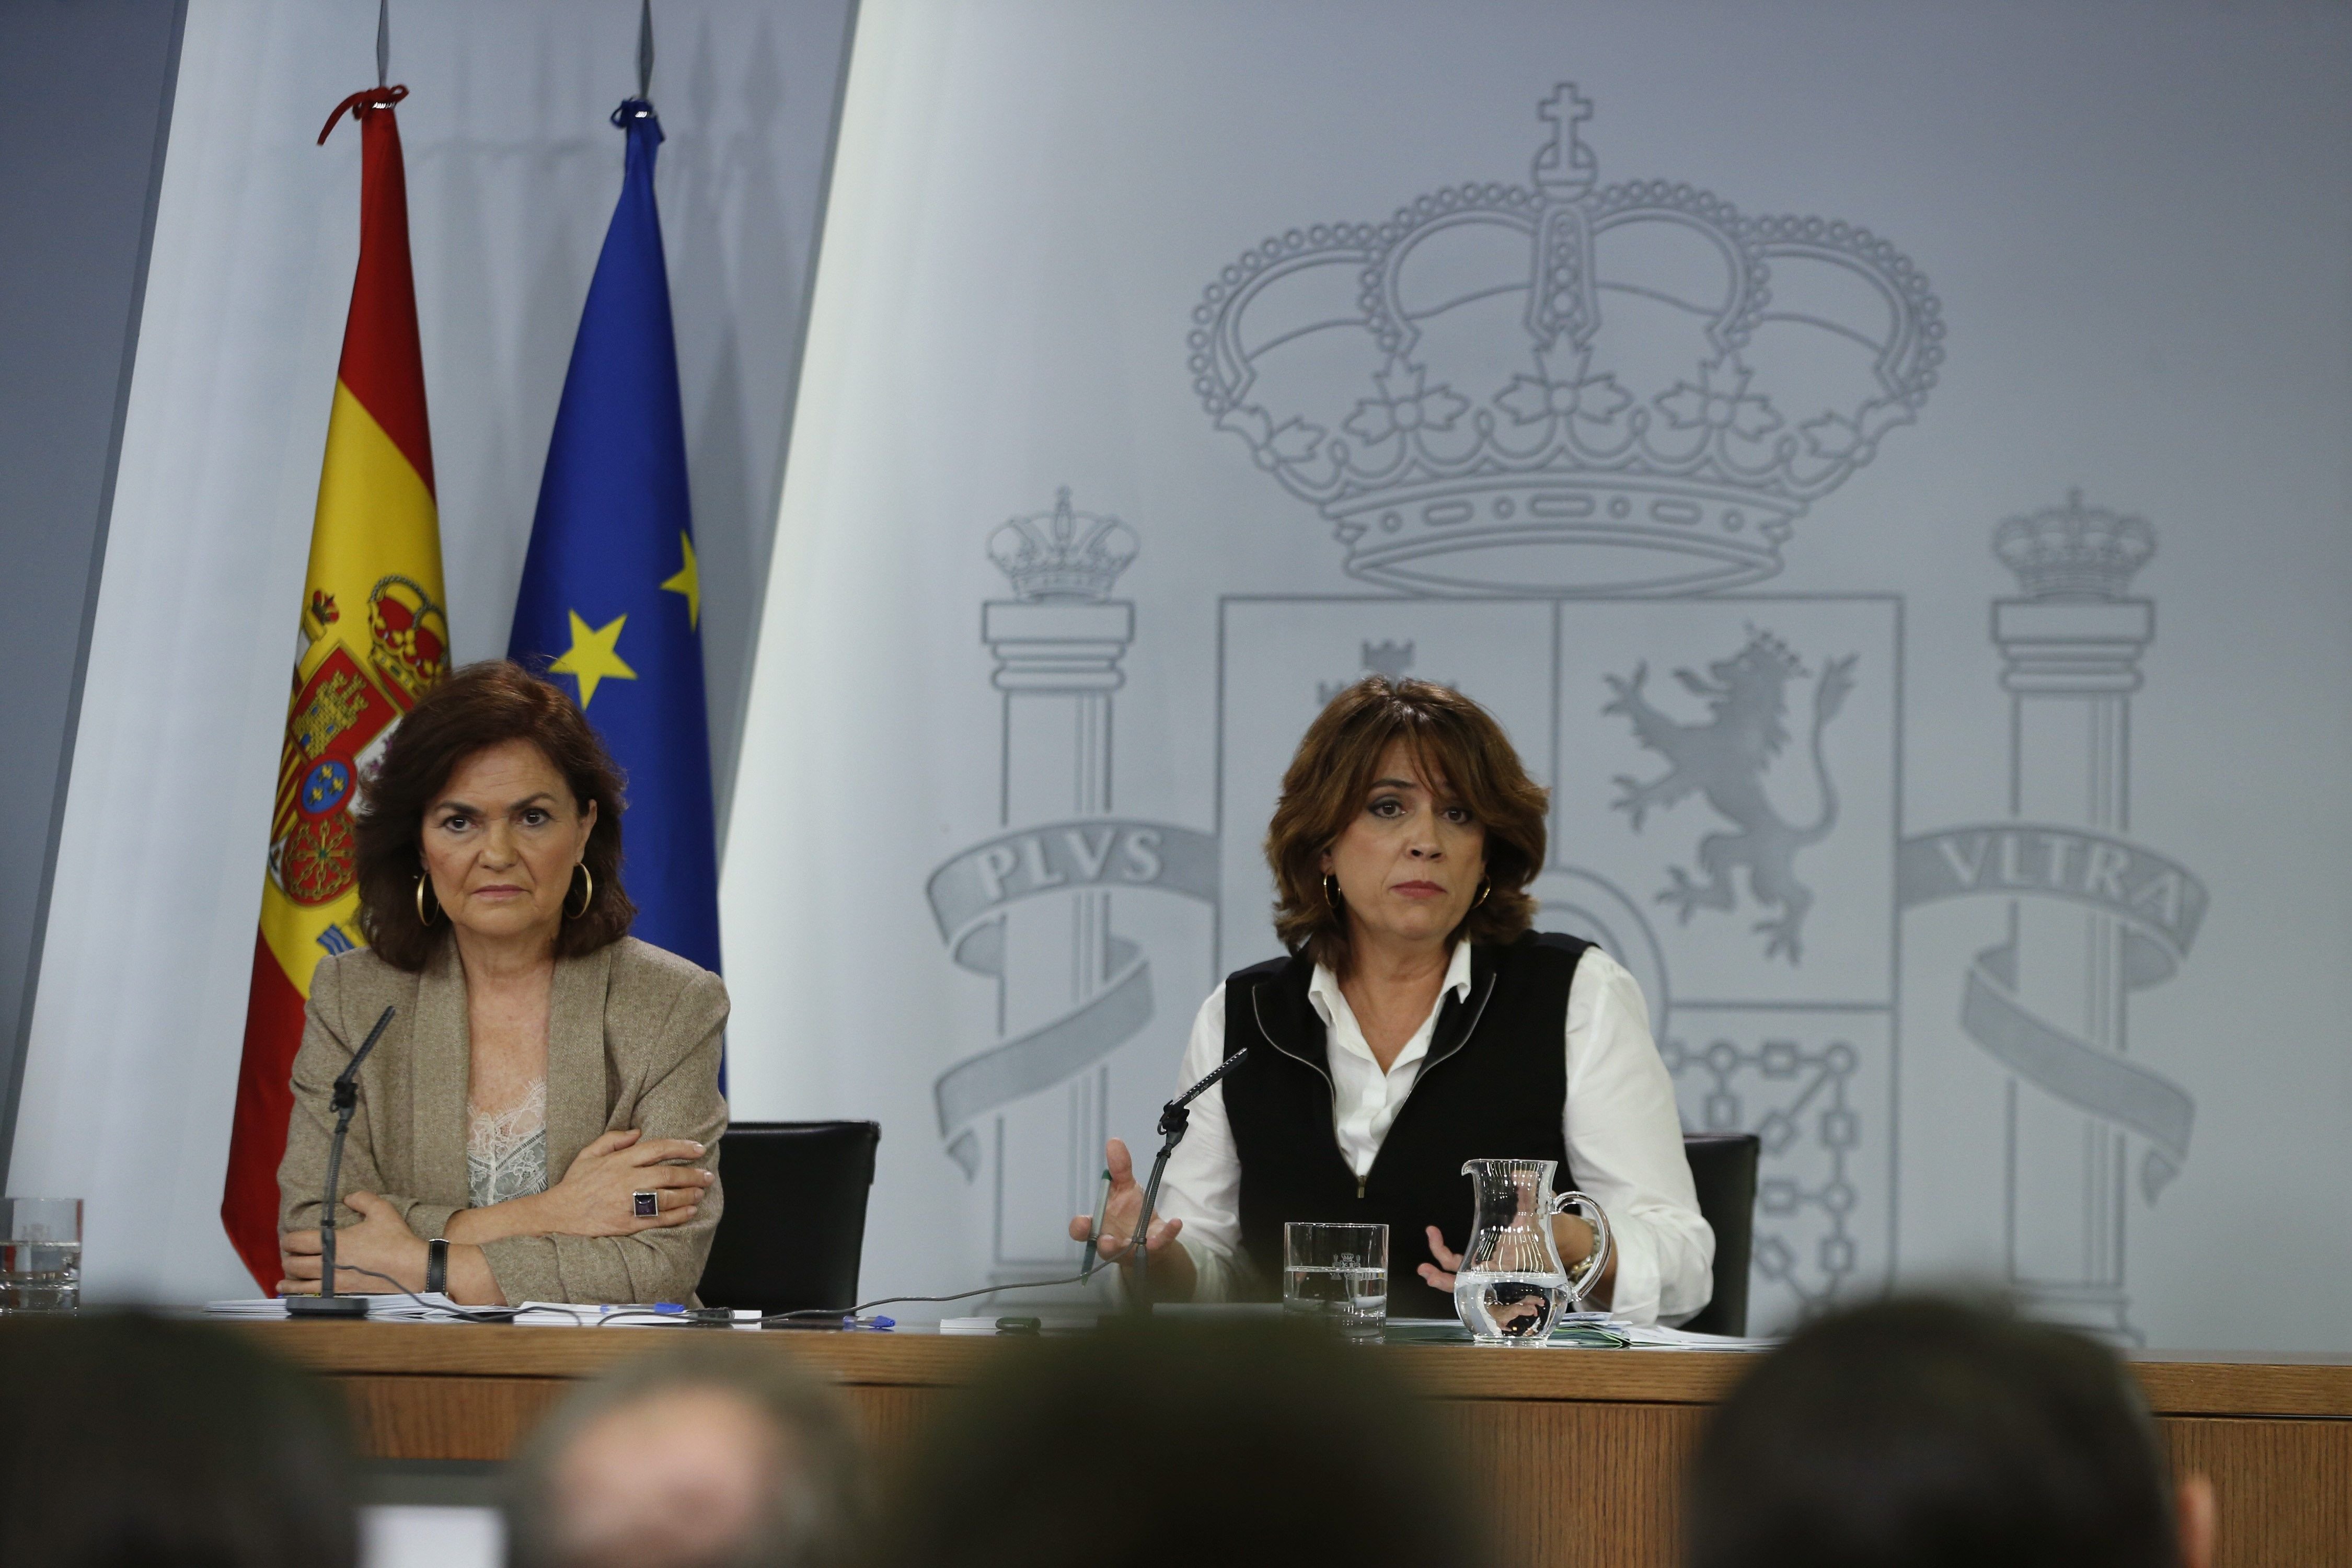 Dolores Delgado: "El govern espanyol no ha fet cap gest"